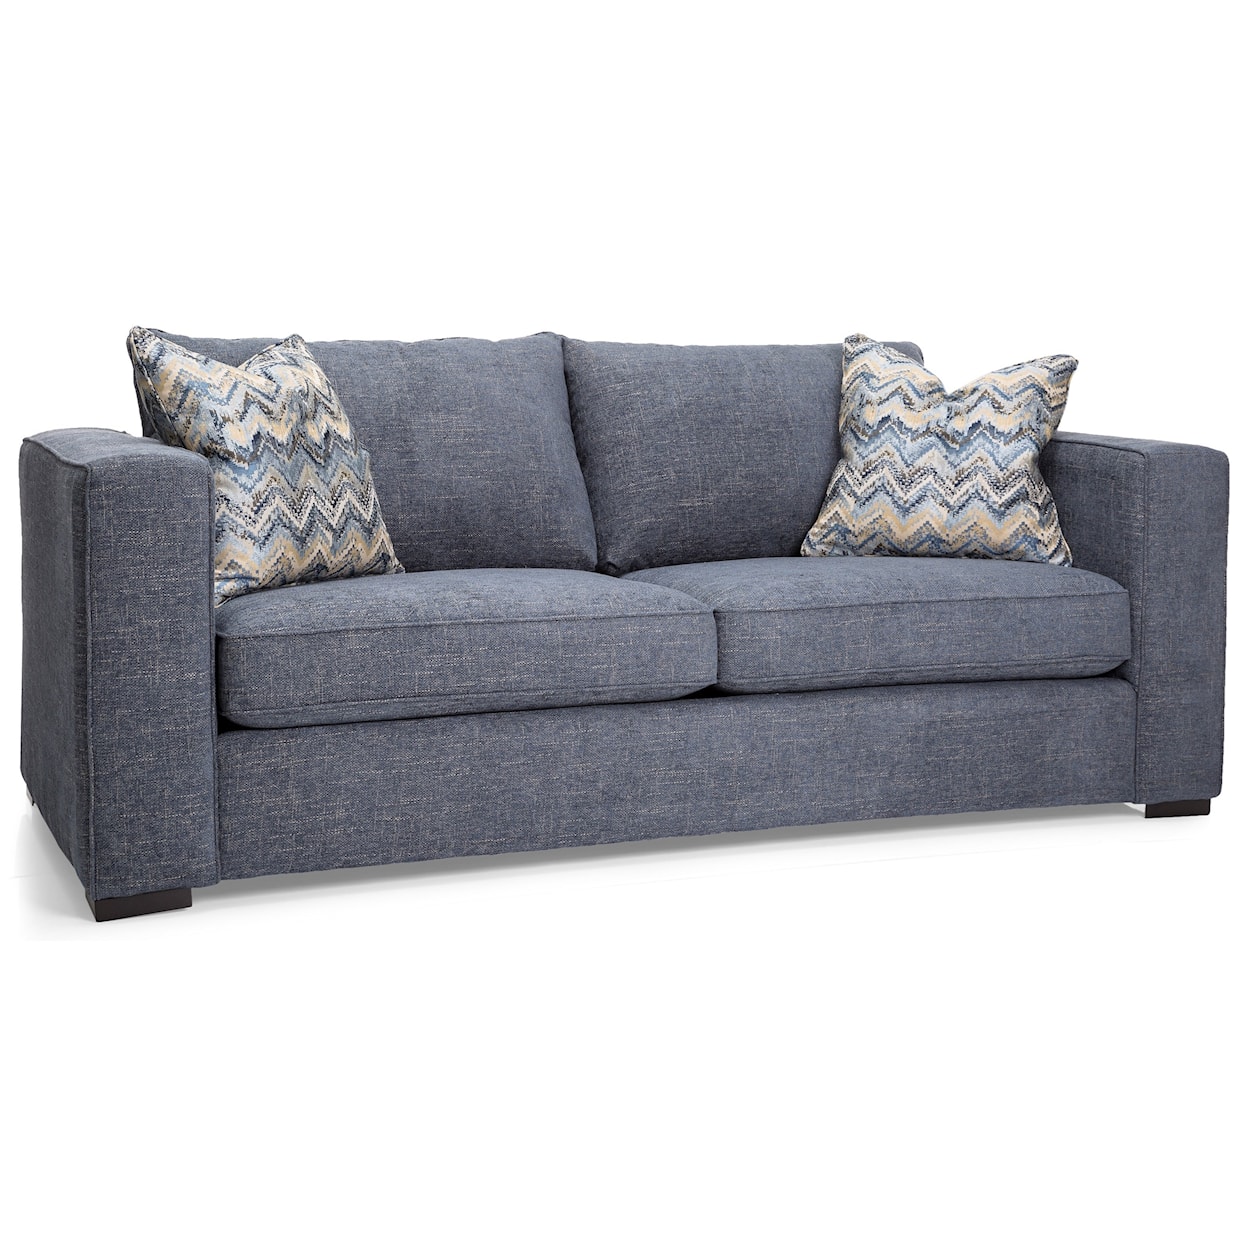 Taelor Designs Braden Sofa